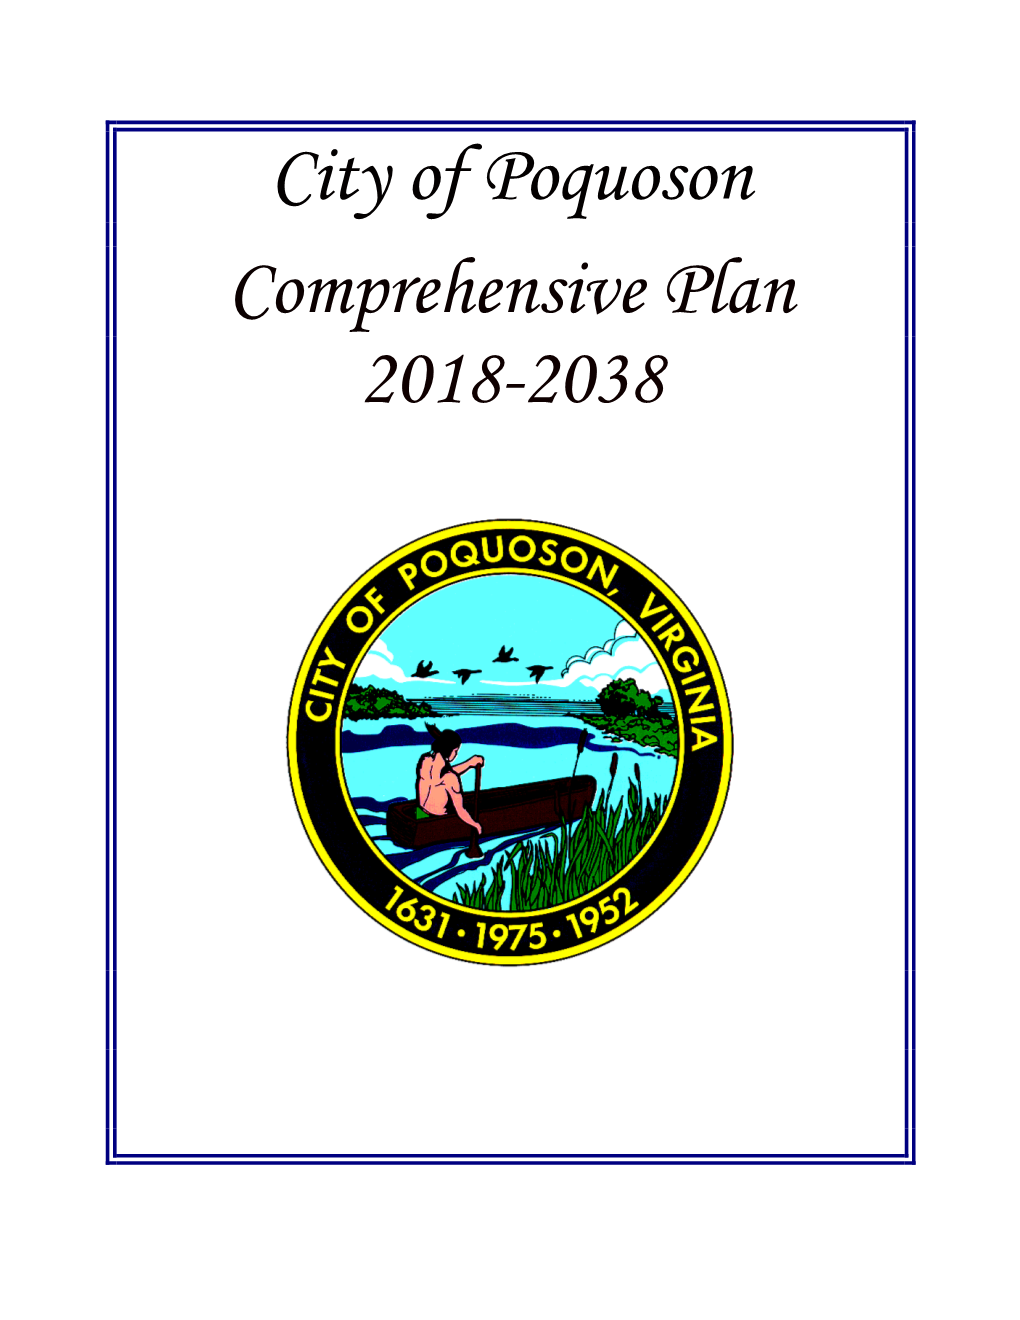 City of Poquoson Comprehensive Plan 2018-2038